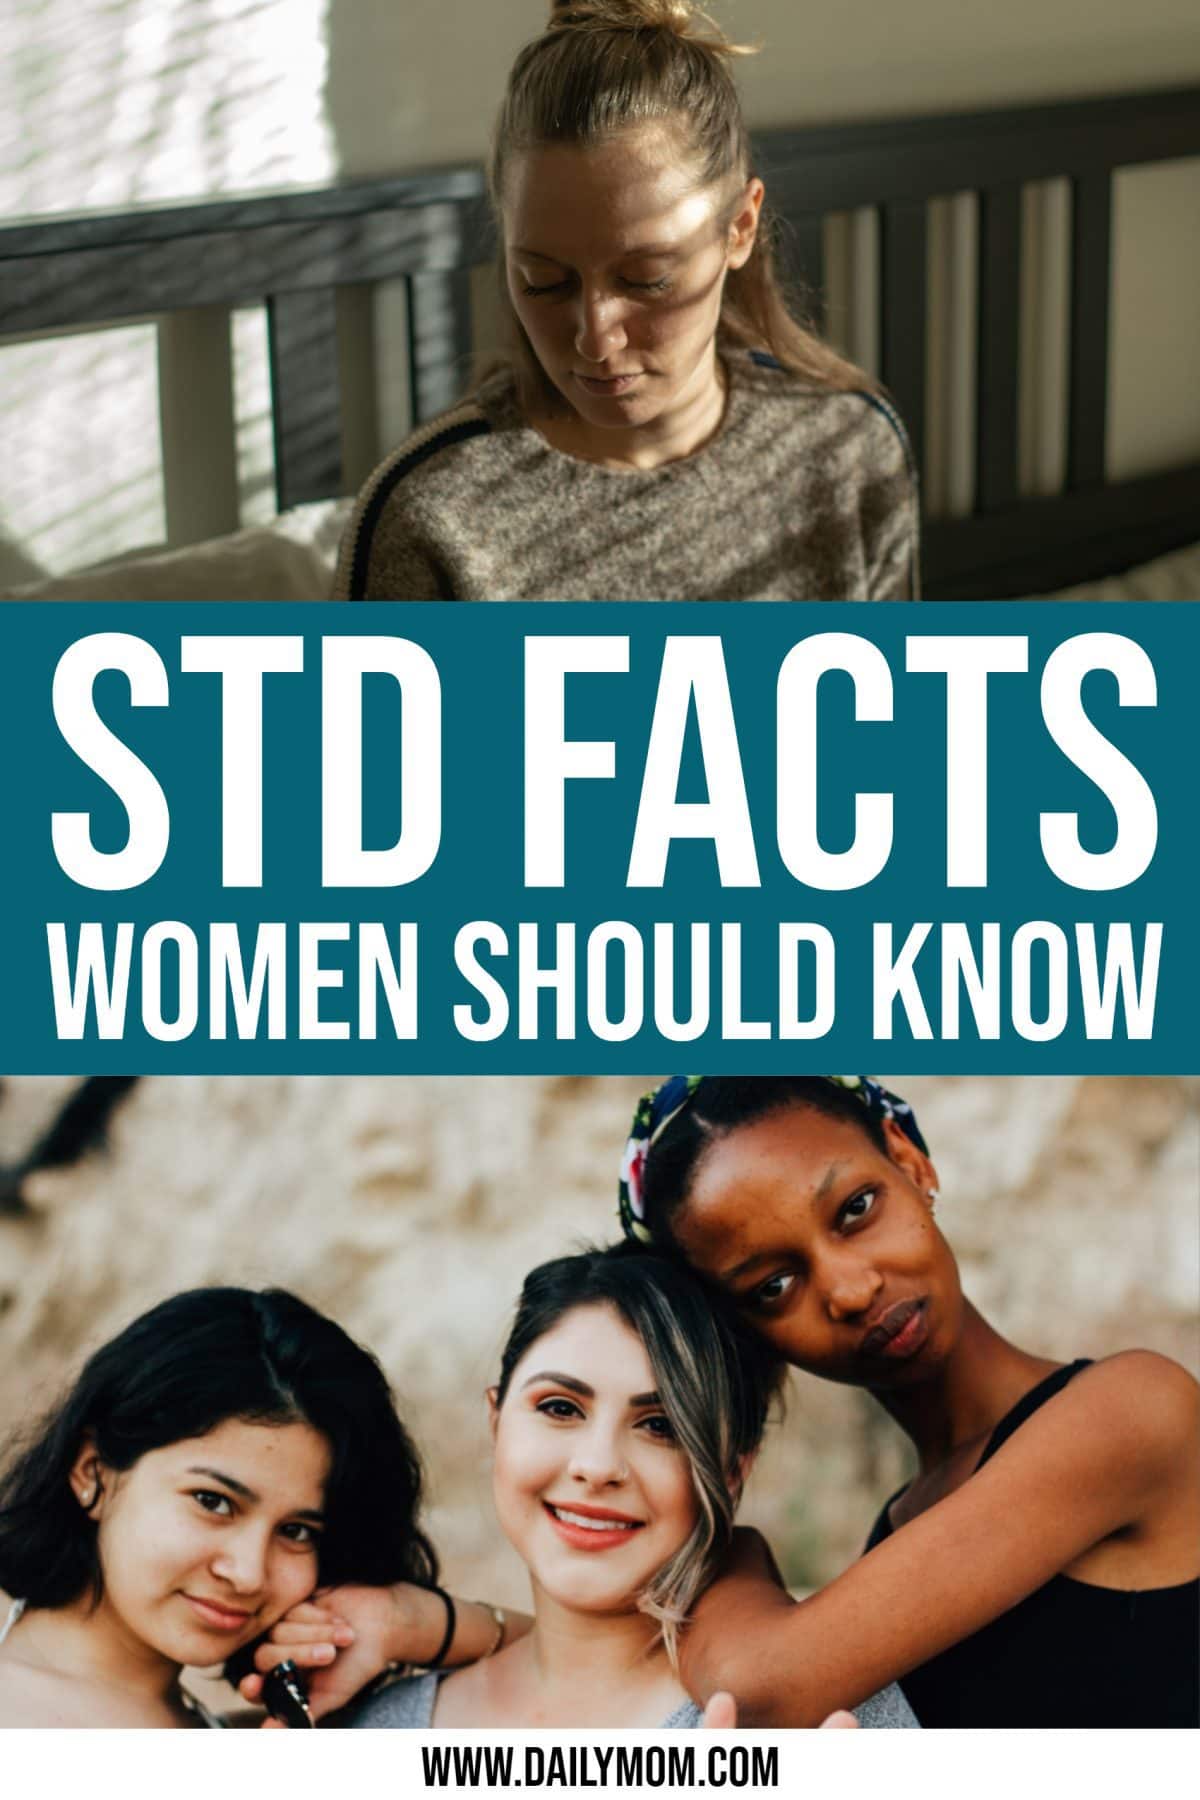 Sti Vs. Std: Important Std Facts For Women